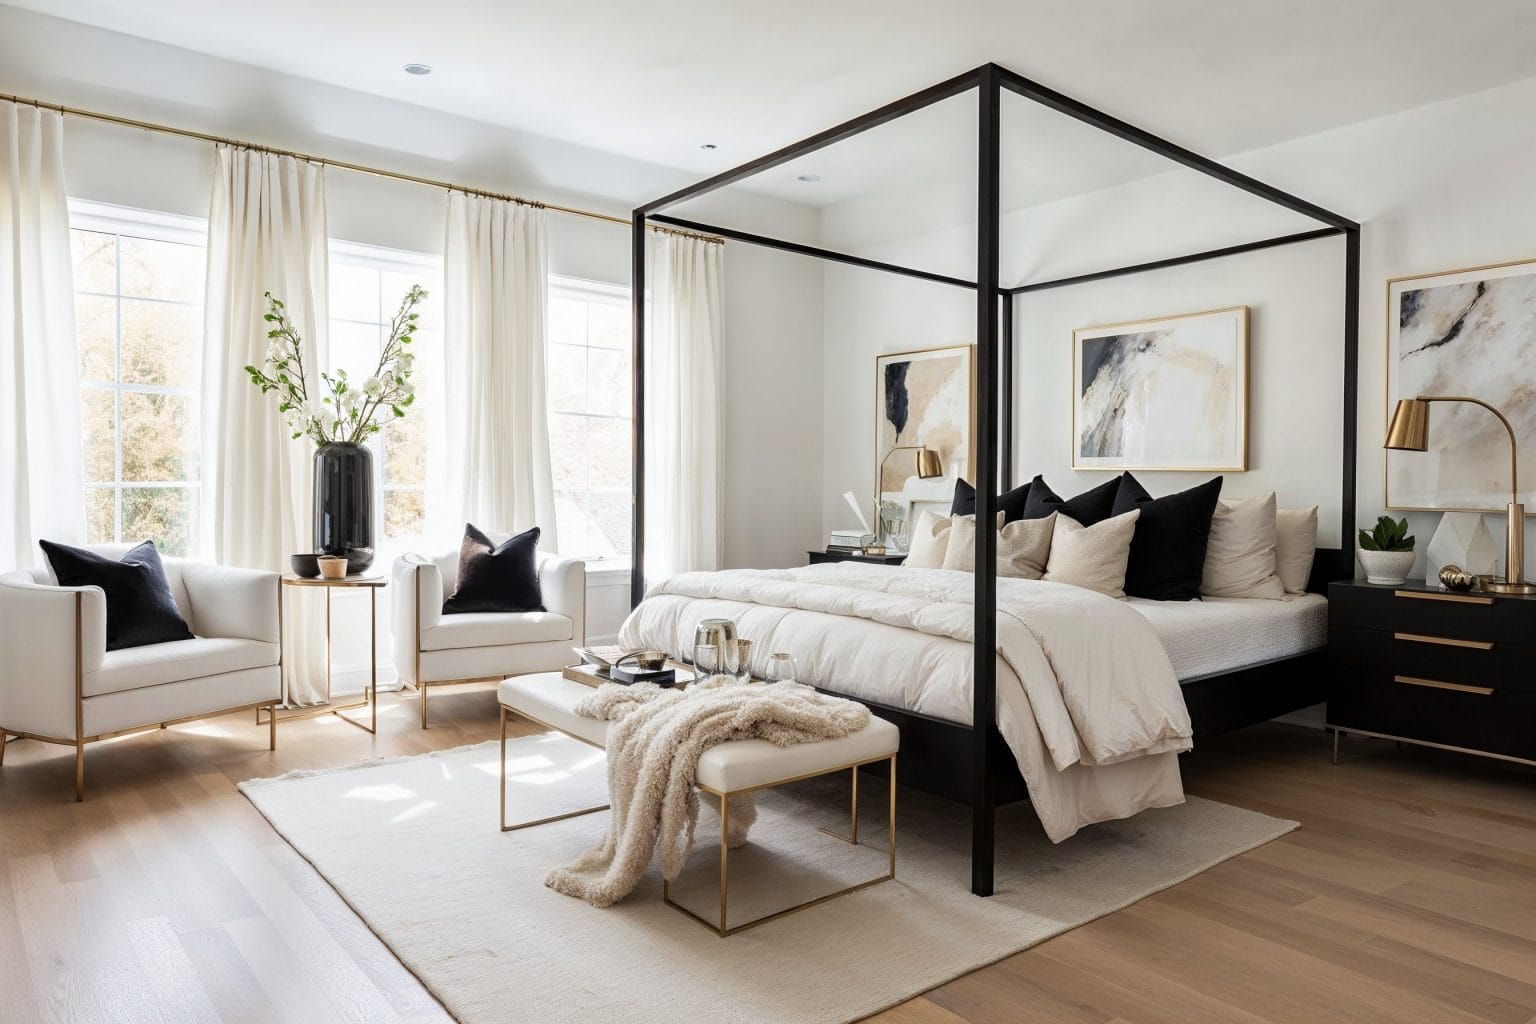 Cozy Master Bedroom Sitting Area Ideas My Domaine 2 1536x1024 